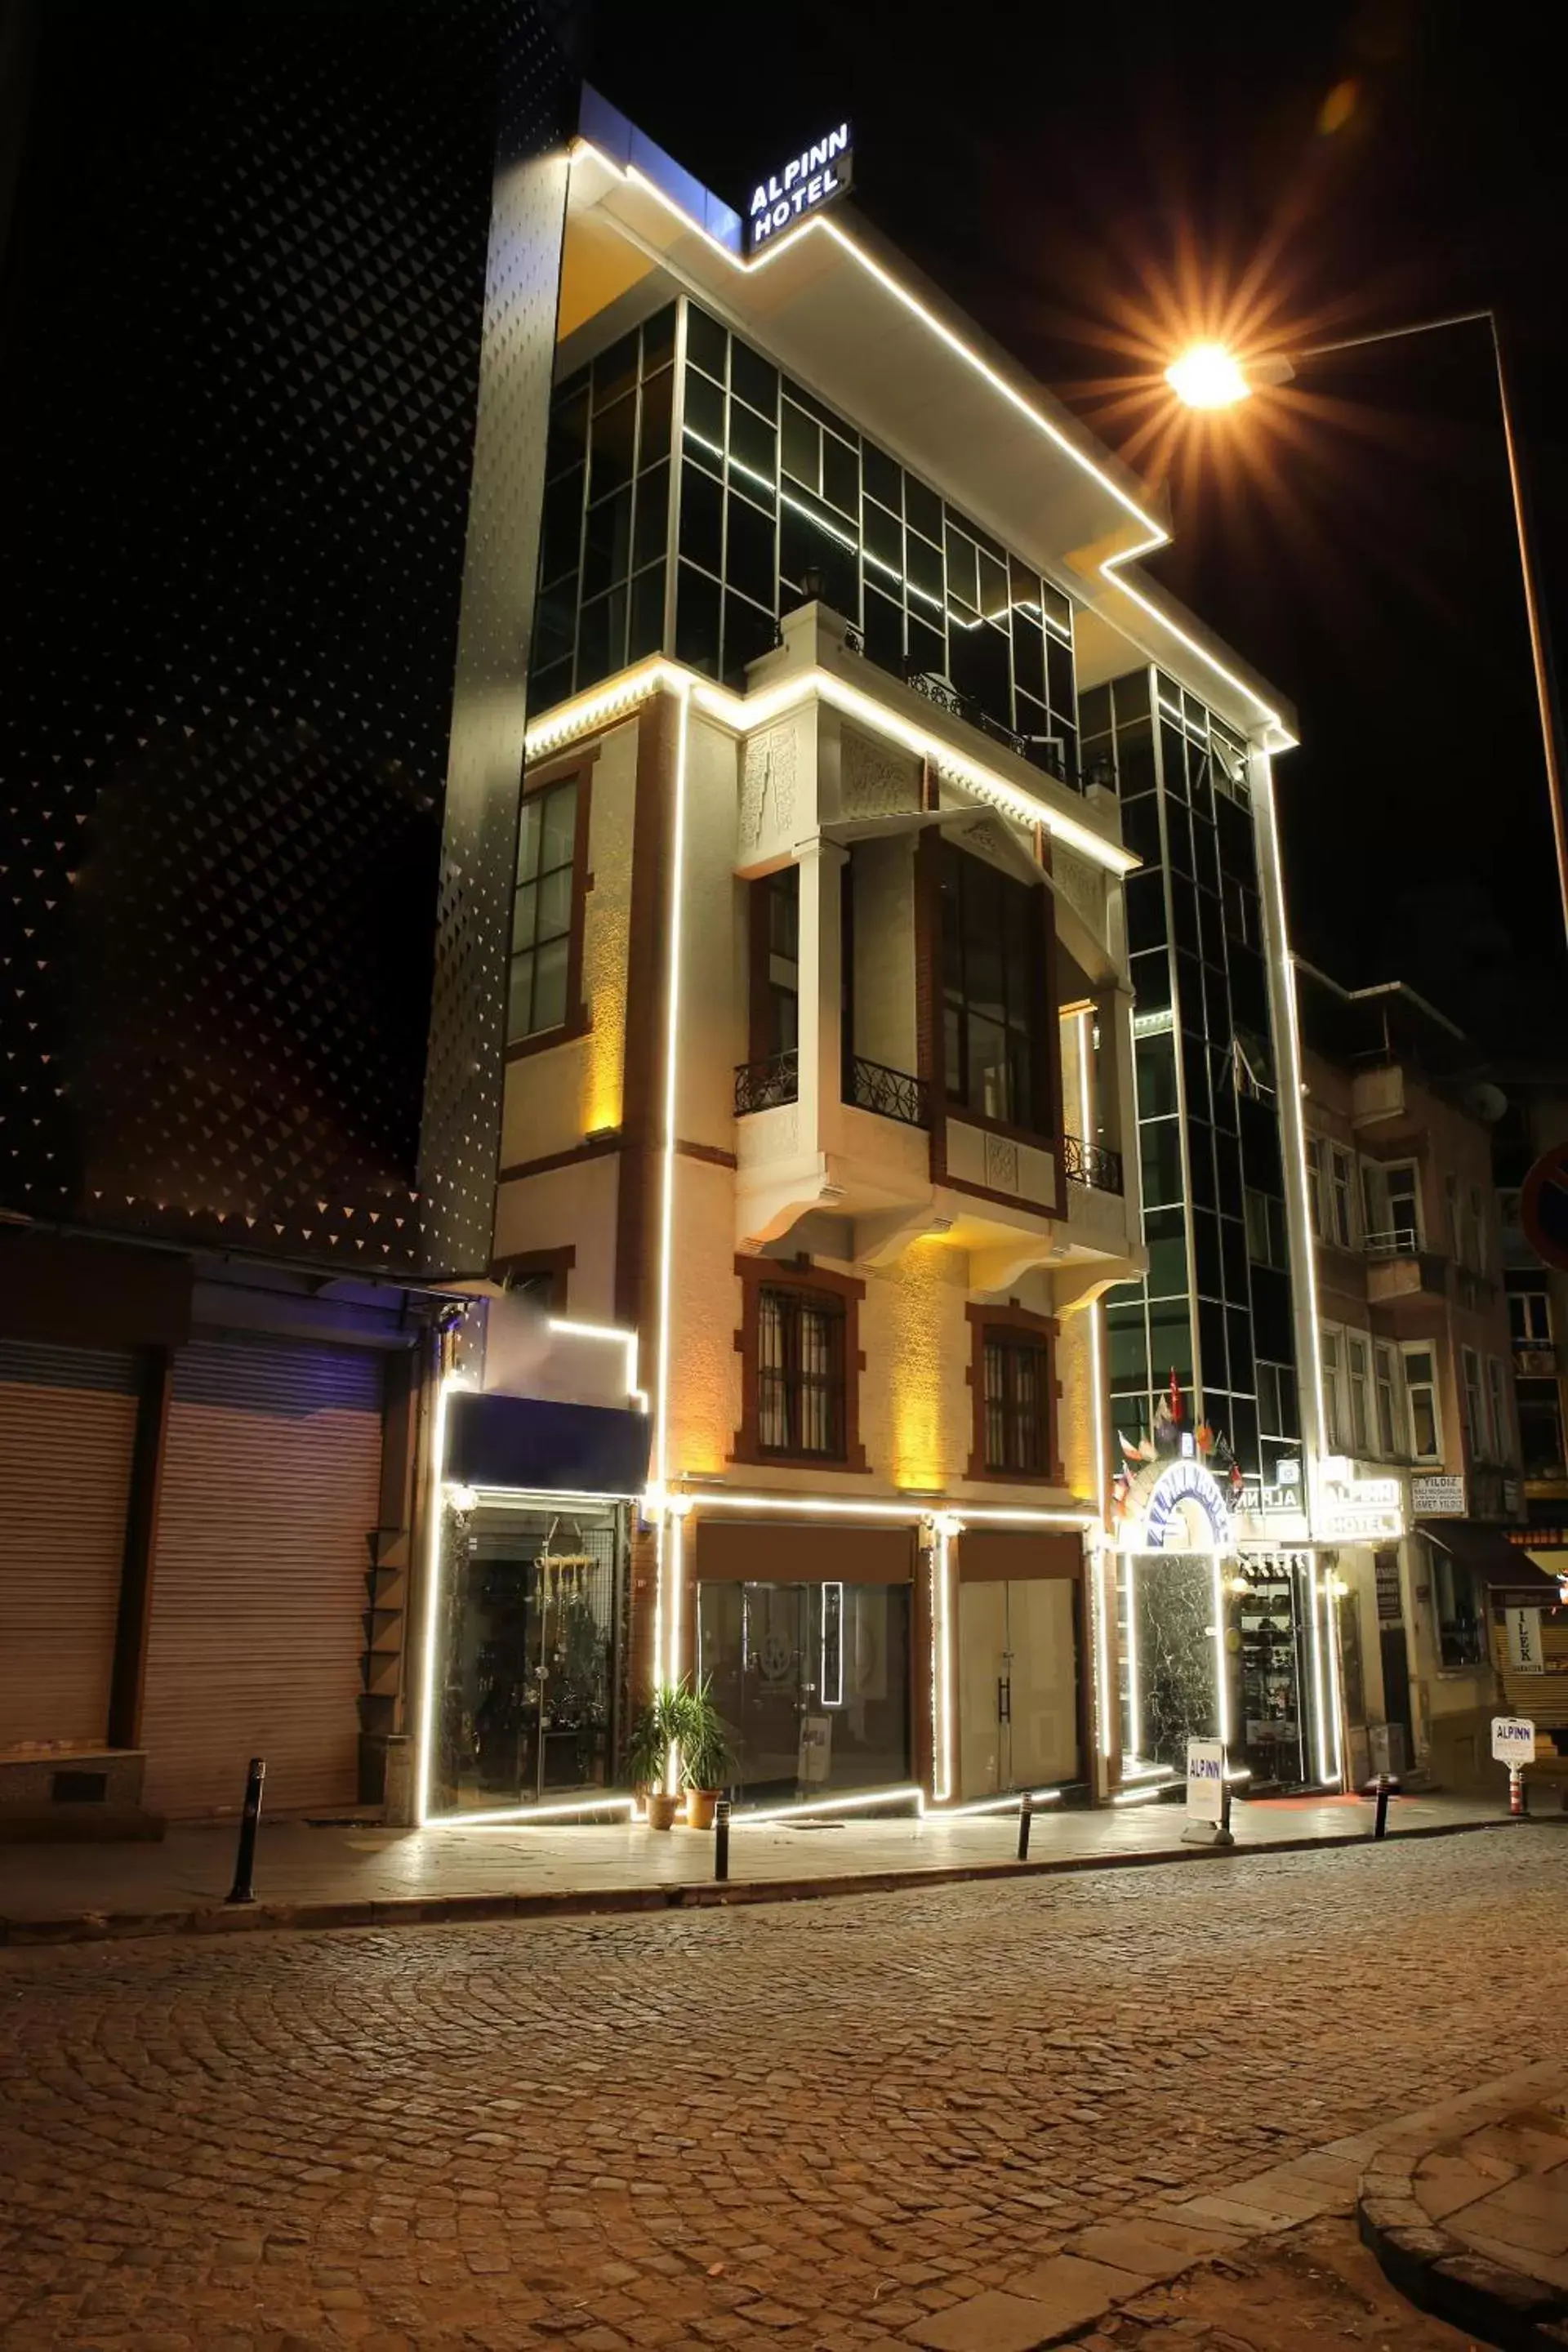 Property Building in Alpinn Hotel Istanbul